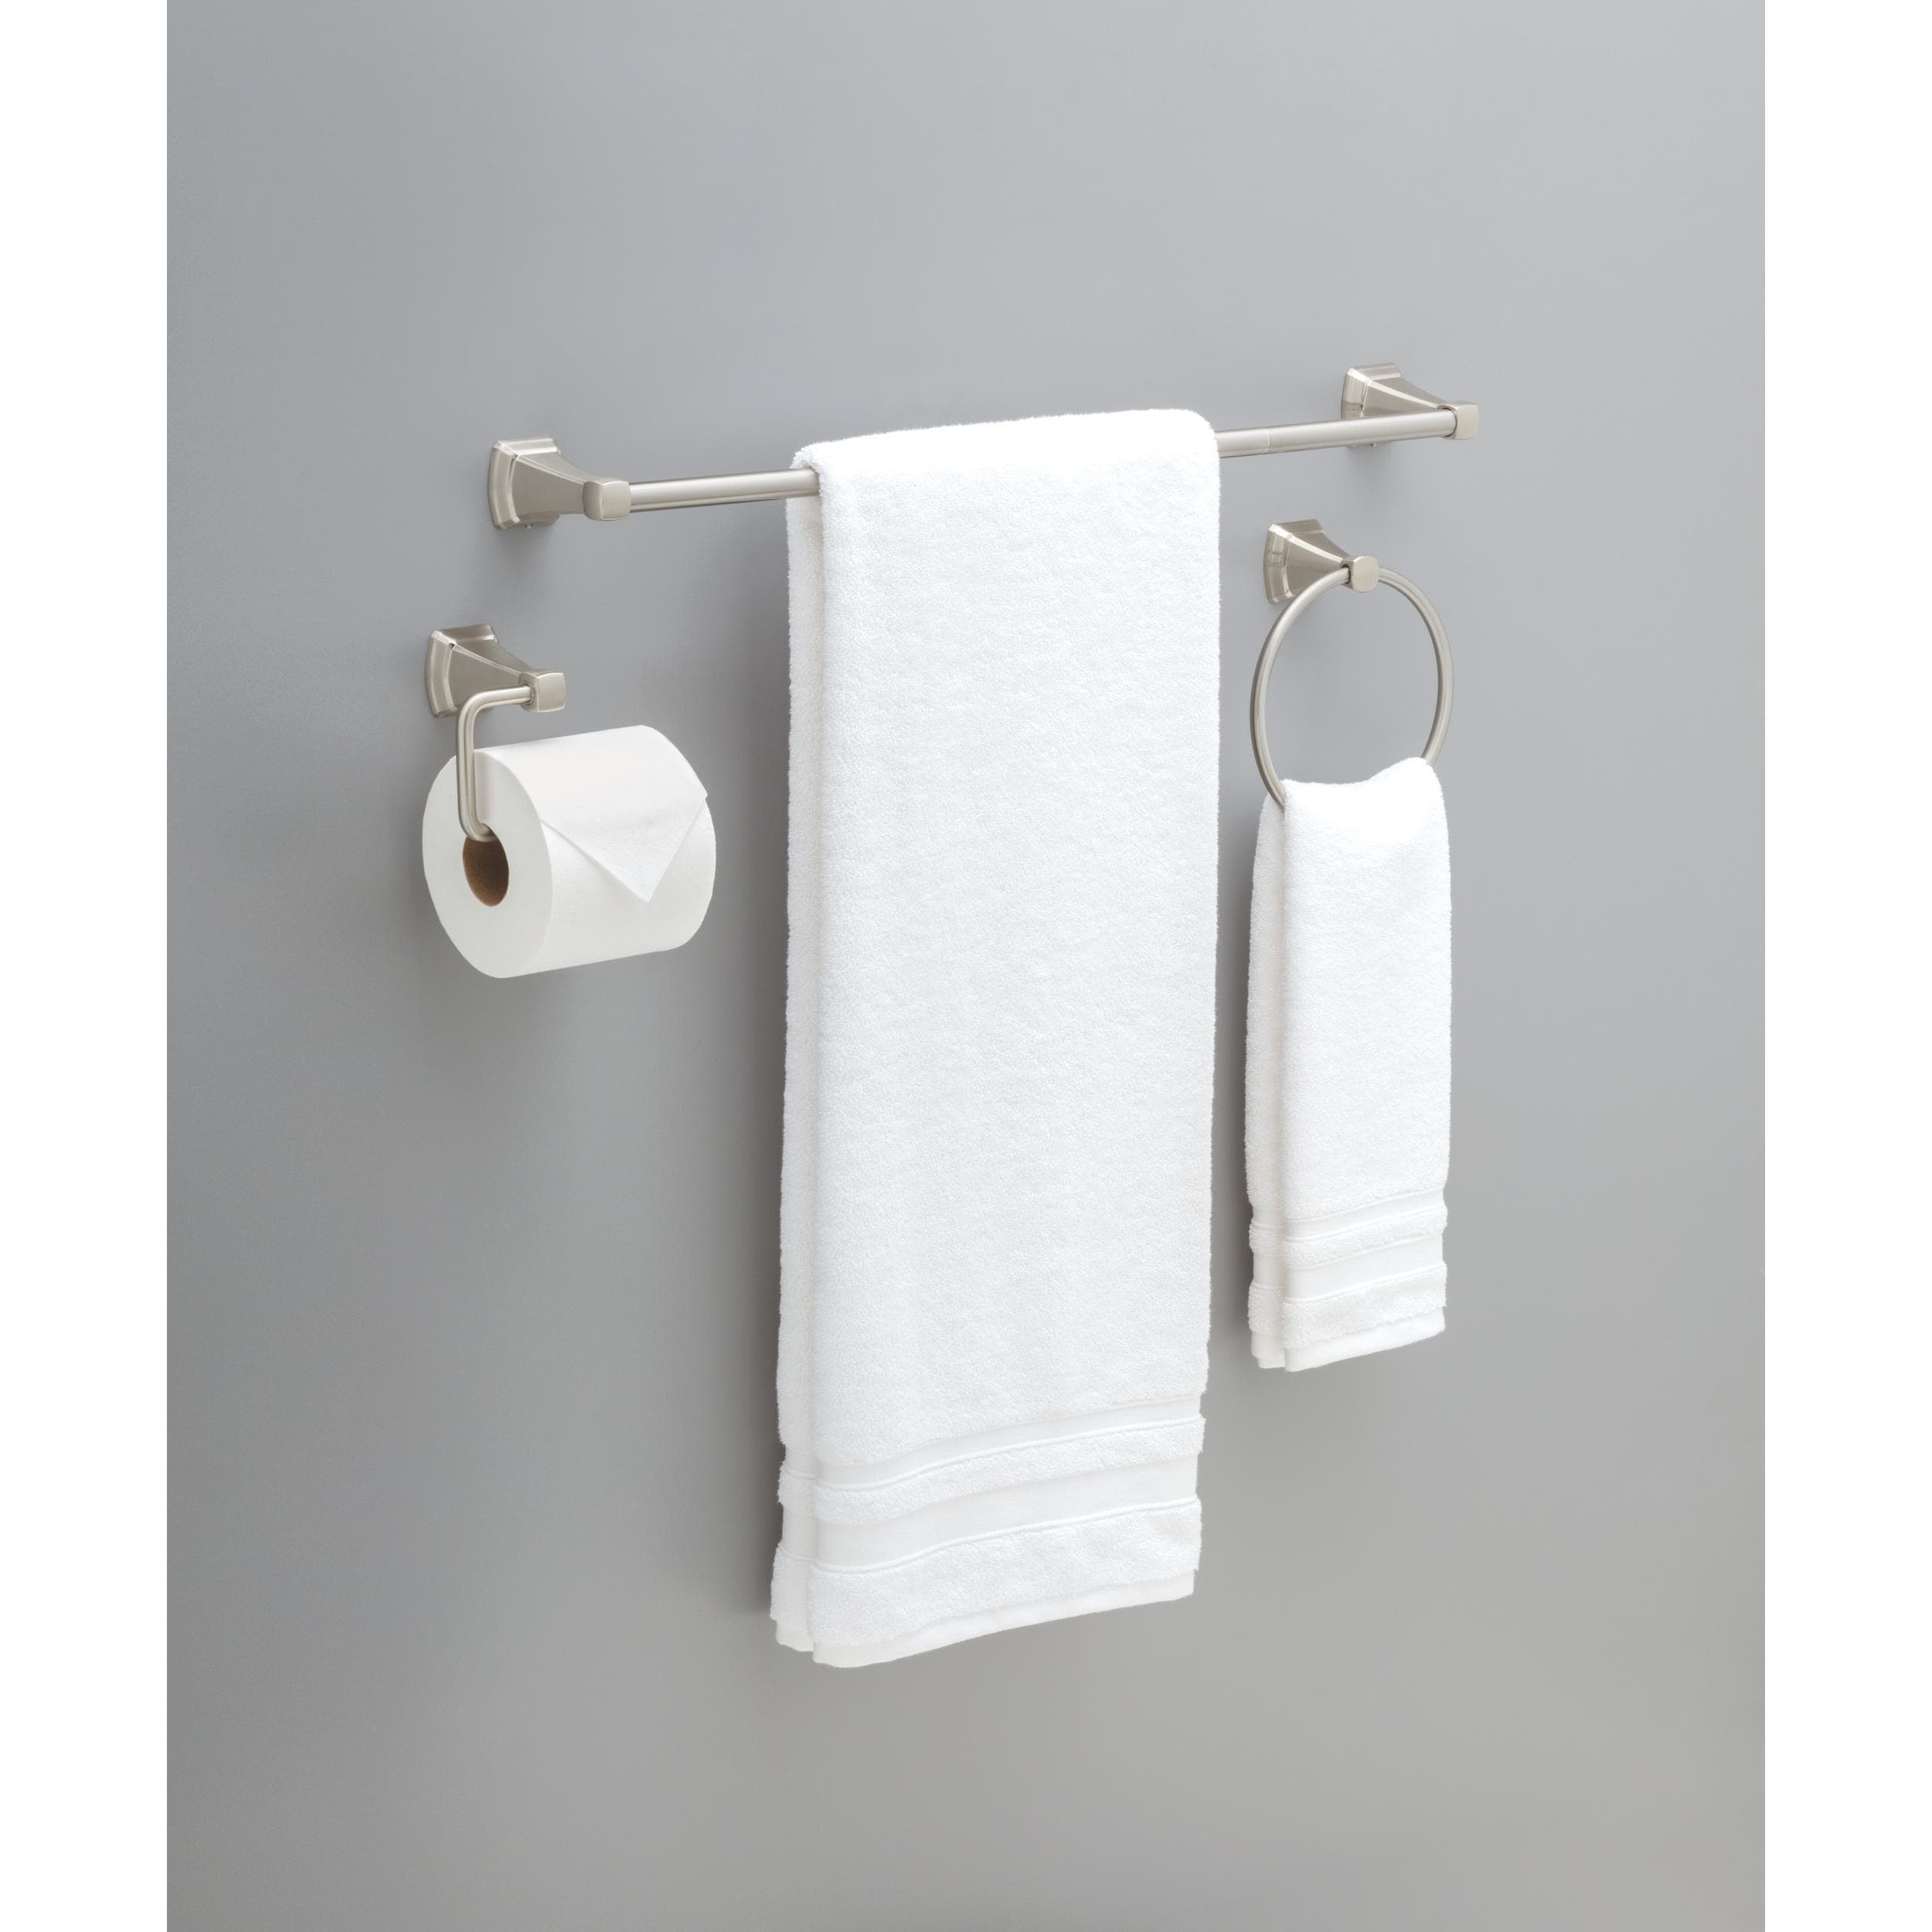 Bathroom Organization Tray & Toilet Paper Holder - For Light Sleepers